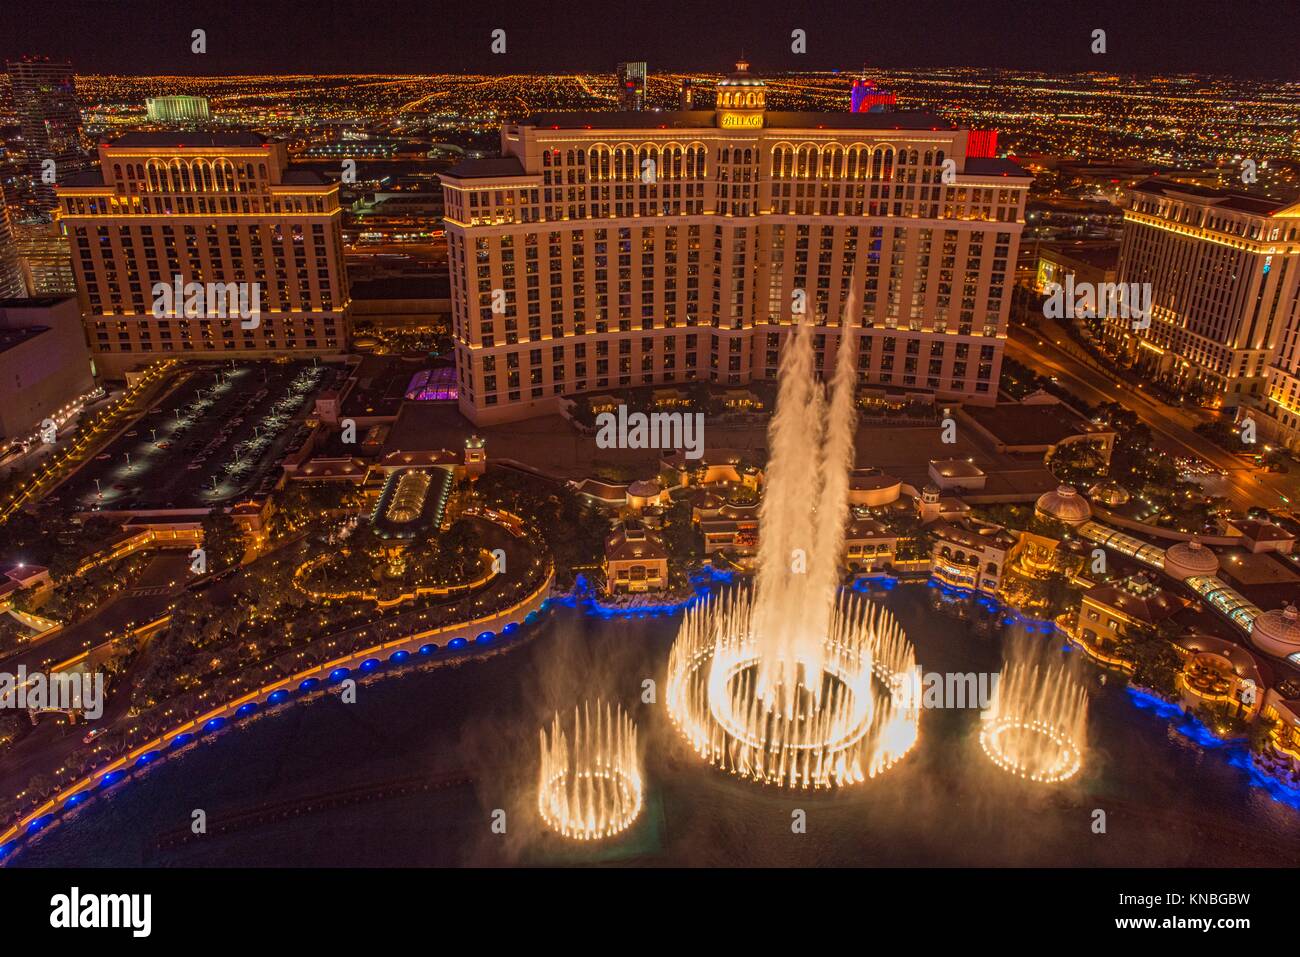 Las Vegas at night from the Paris Casino resort hotel Eiffel Tower- Bellagio hotel and fountains, Las Vegas, Nevada, USA. Stock Photo